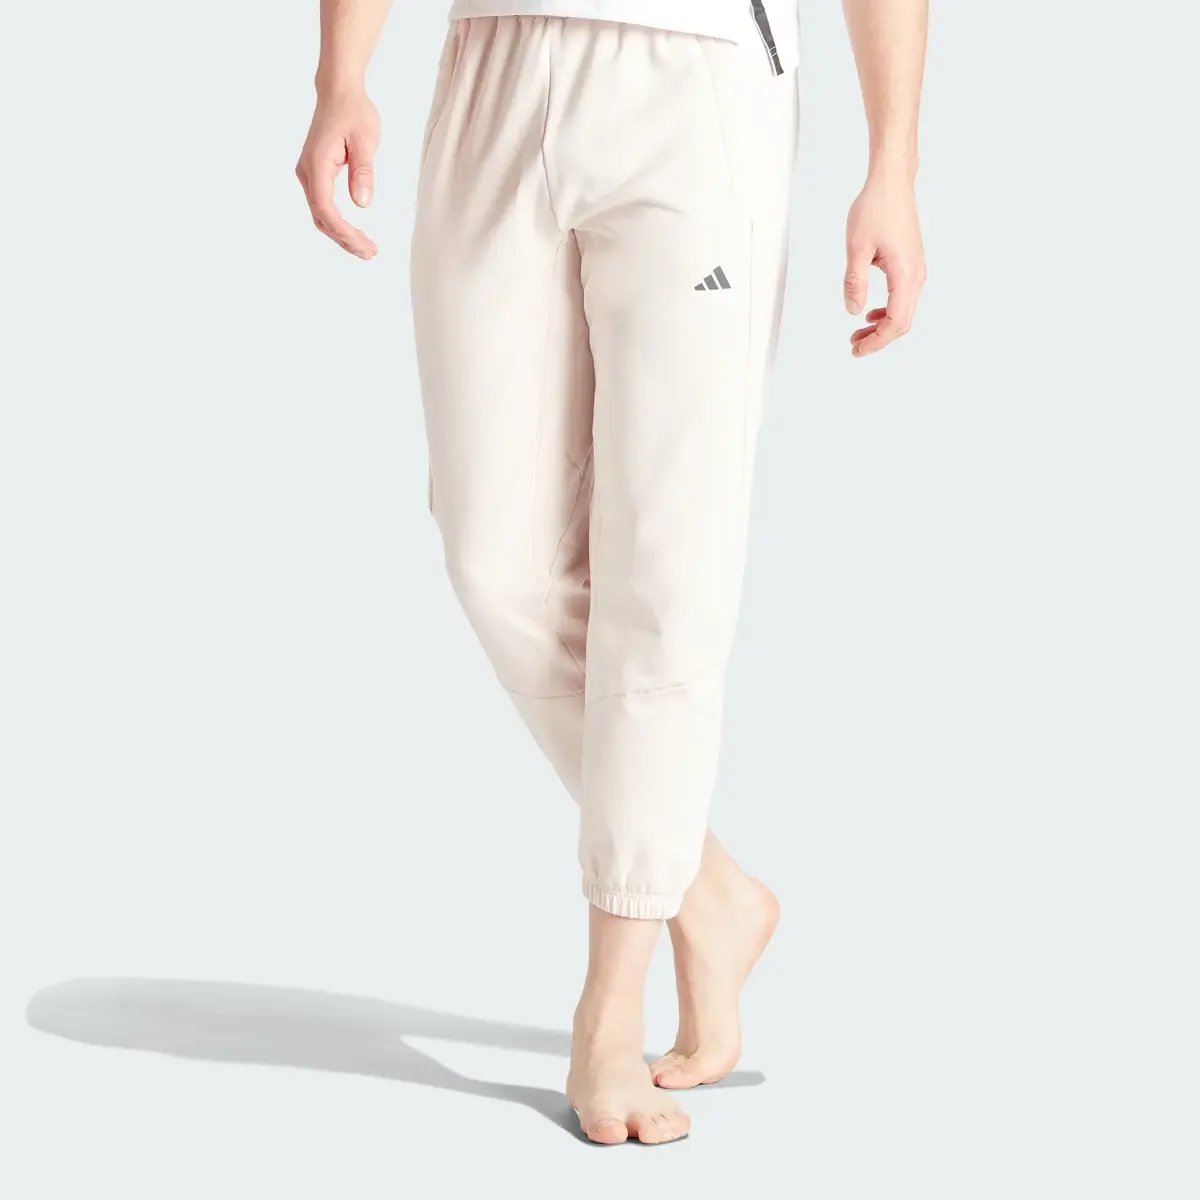 Adidas Pants de Yoga Designed for Training 7/8. 1